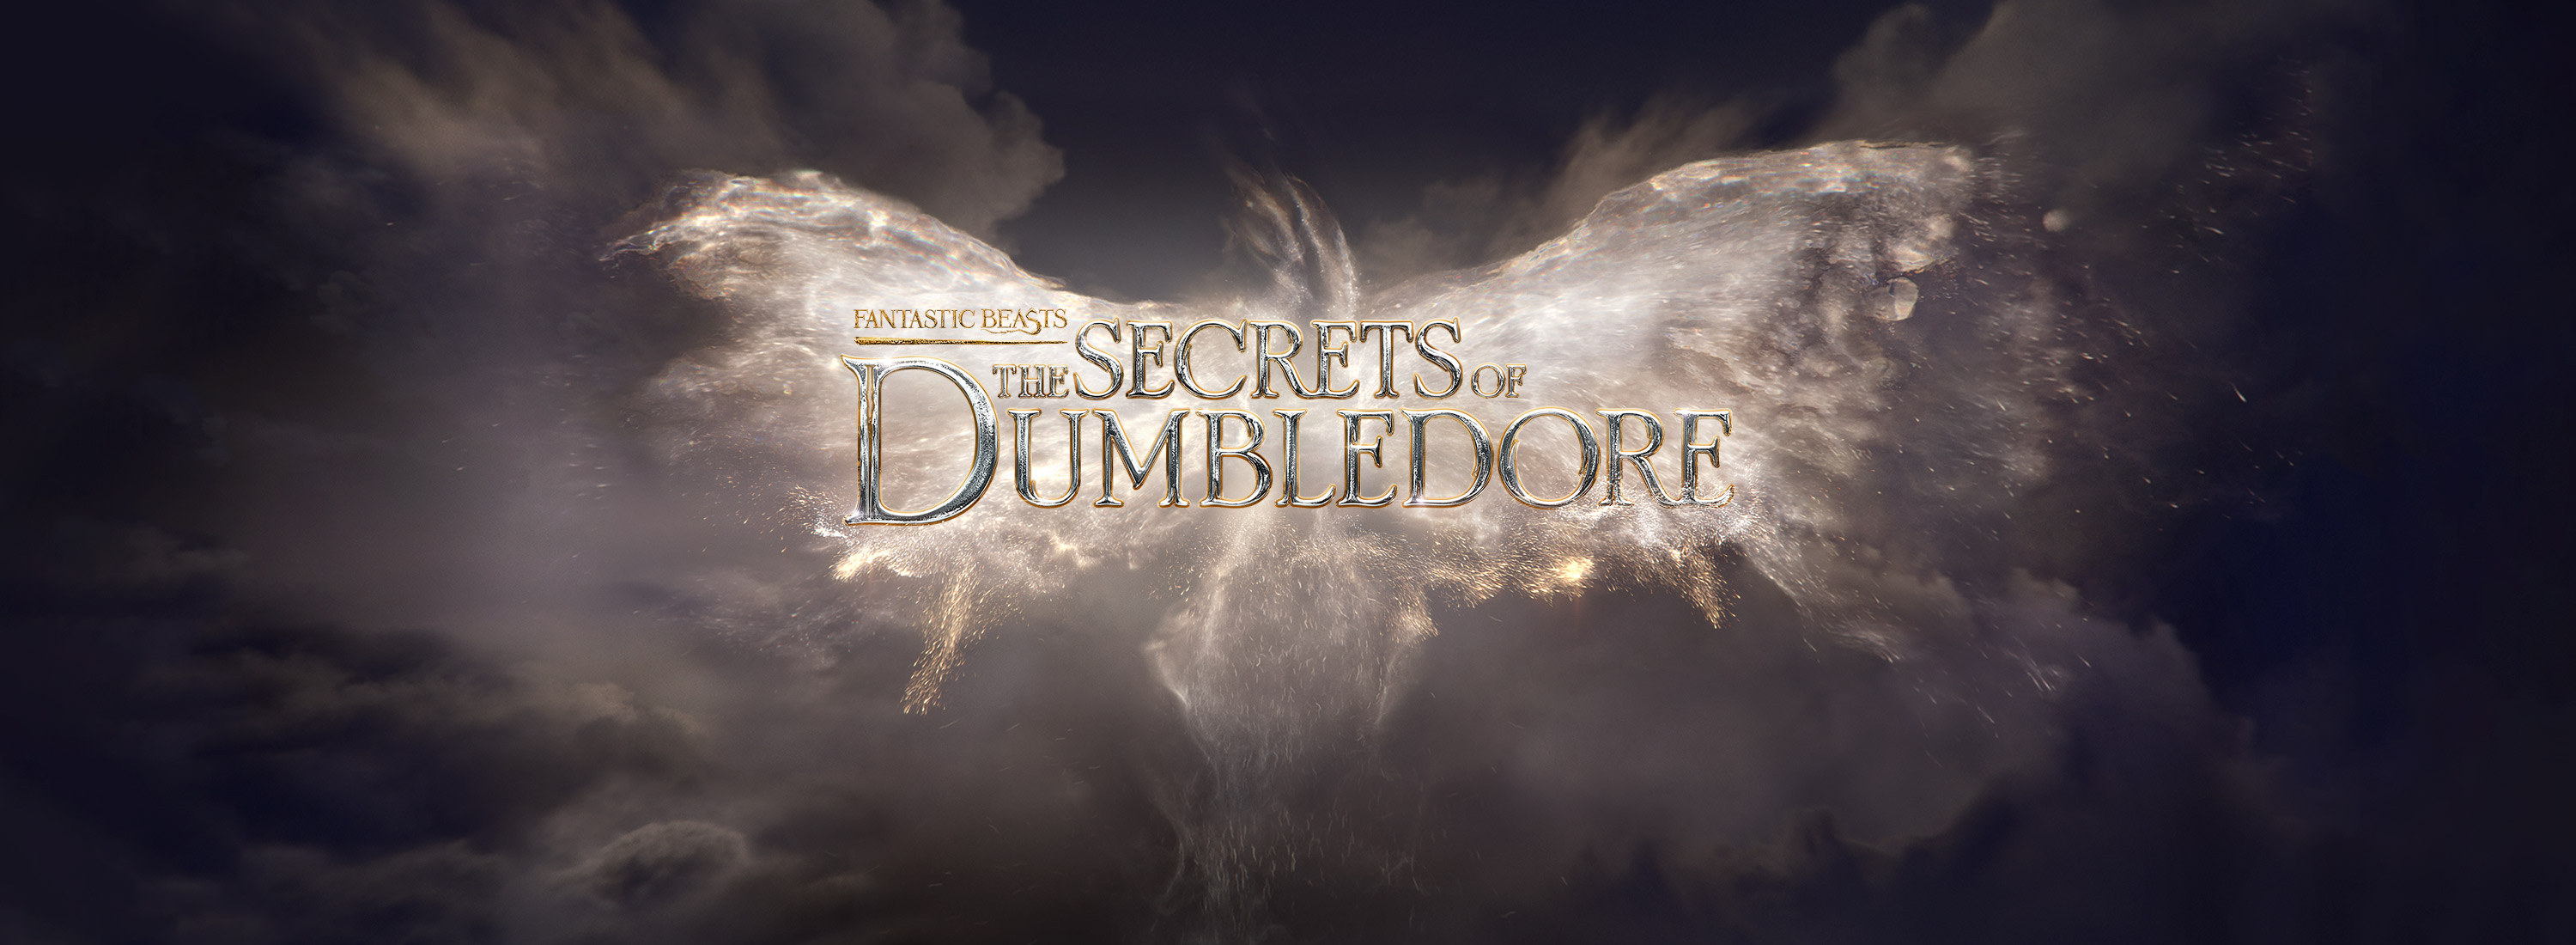 Movie Fantastic Beasts: The Secrets of Dumbledore HD Wallpaper | Background Image